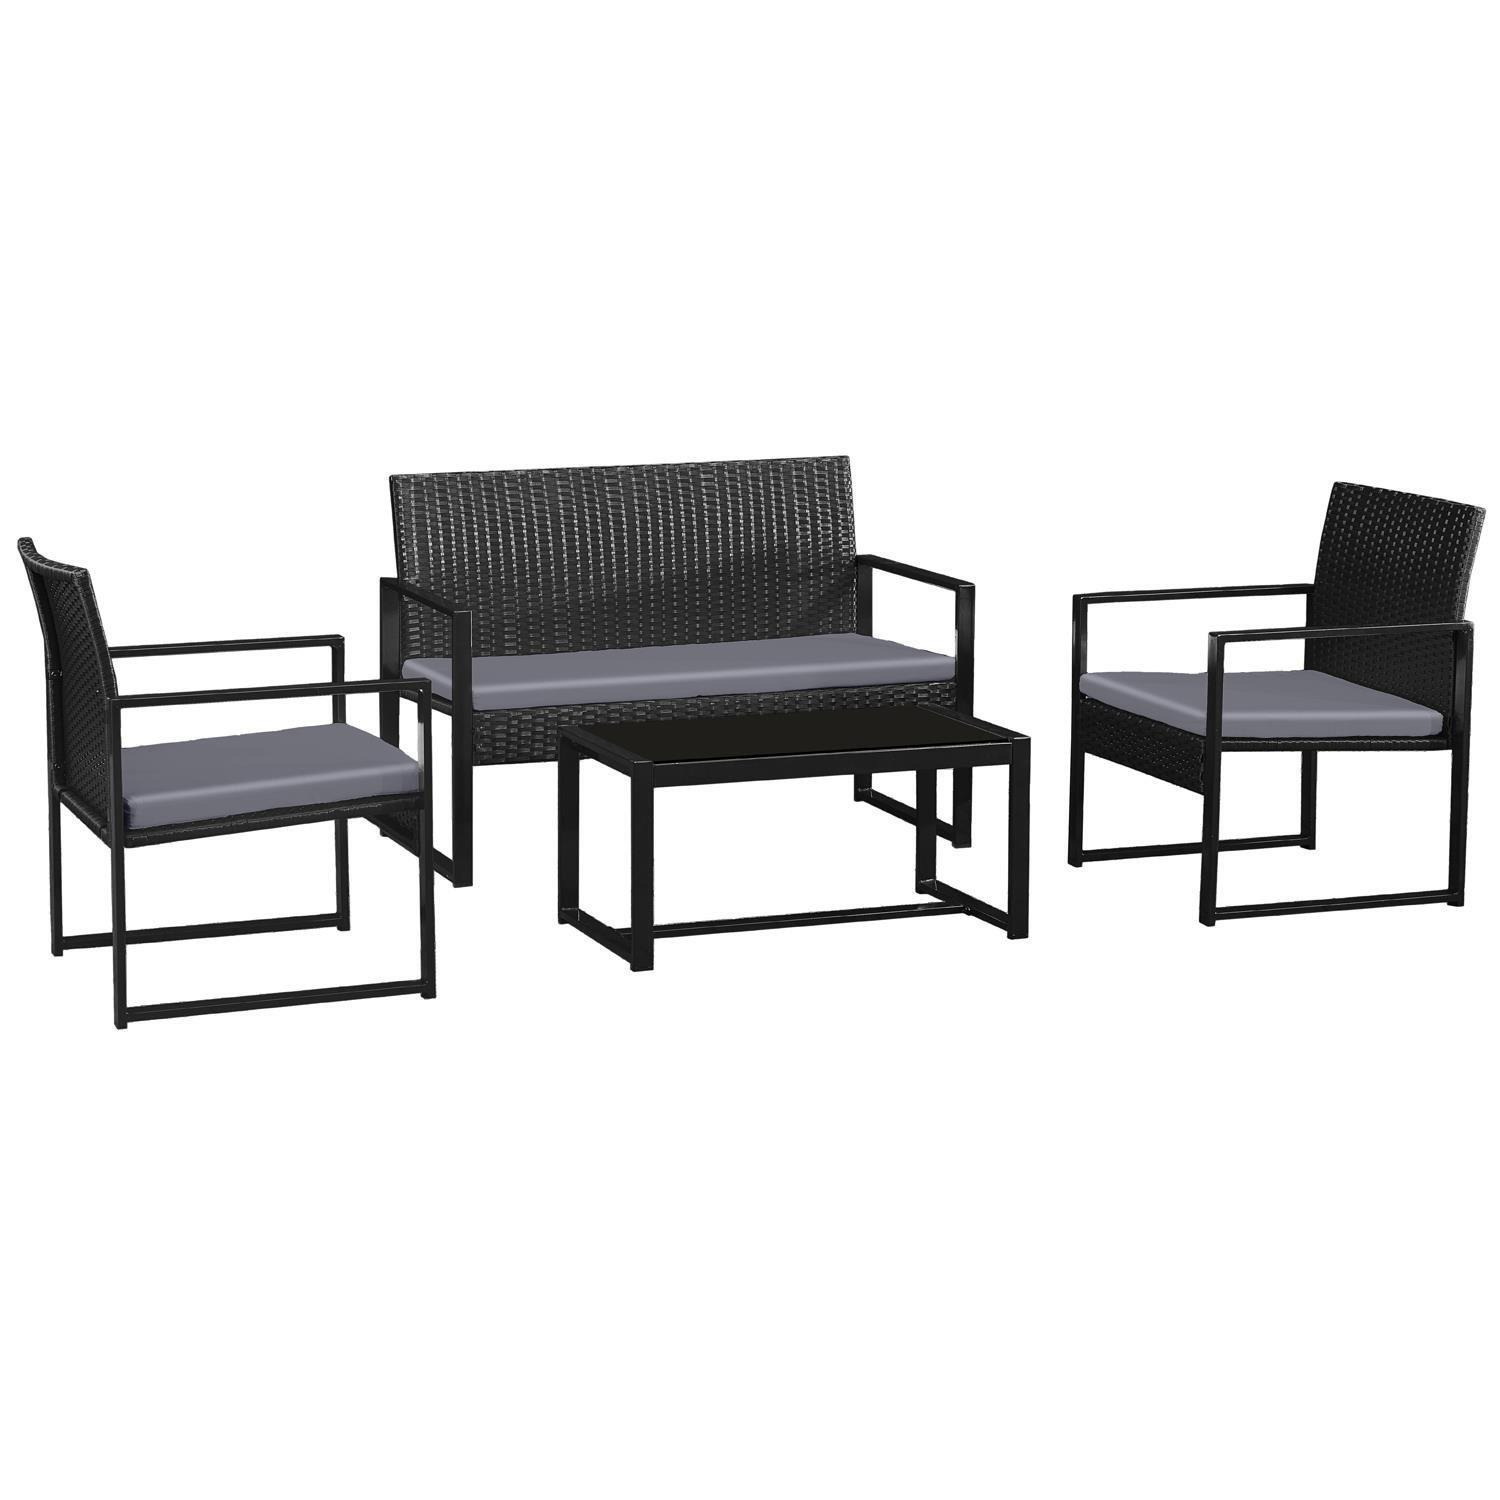 4pc Rattan Garden Furniture Outdoor Sofa Chairs Table Patio Set Grey Cushions - image 1